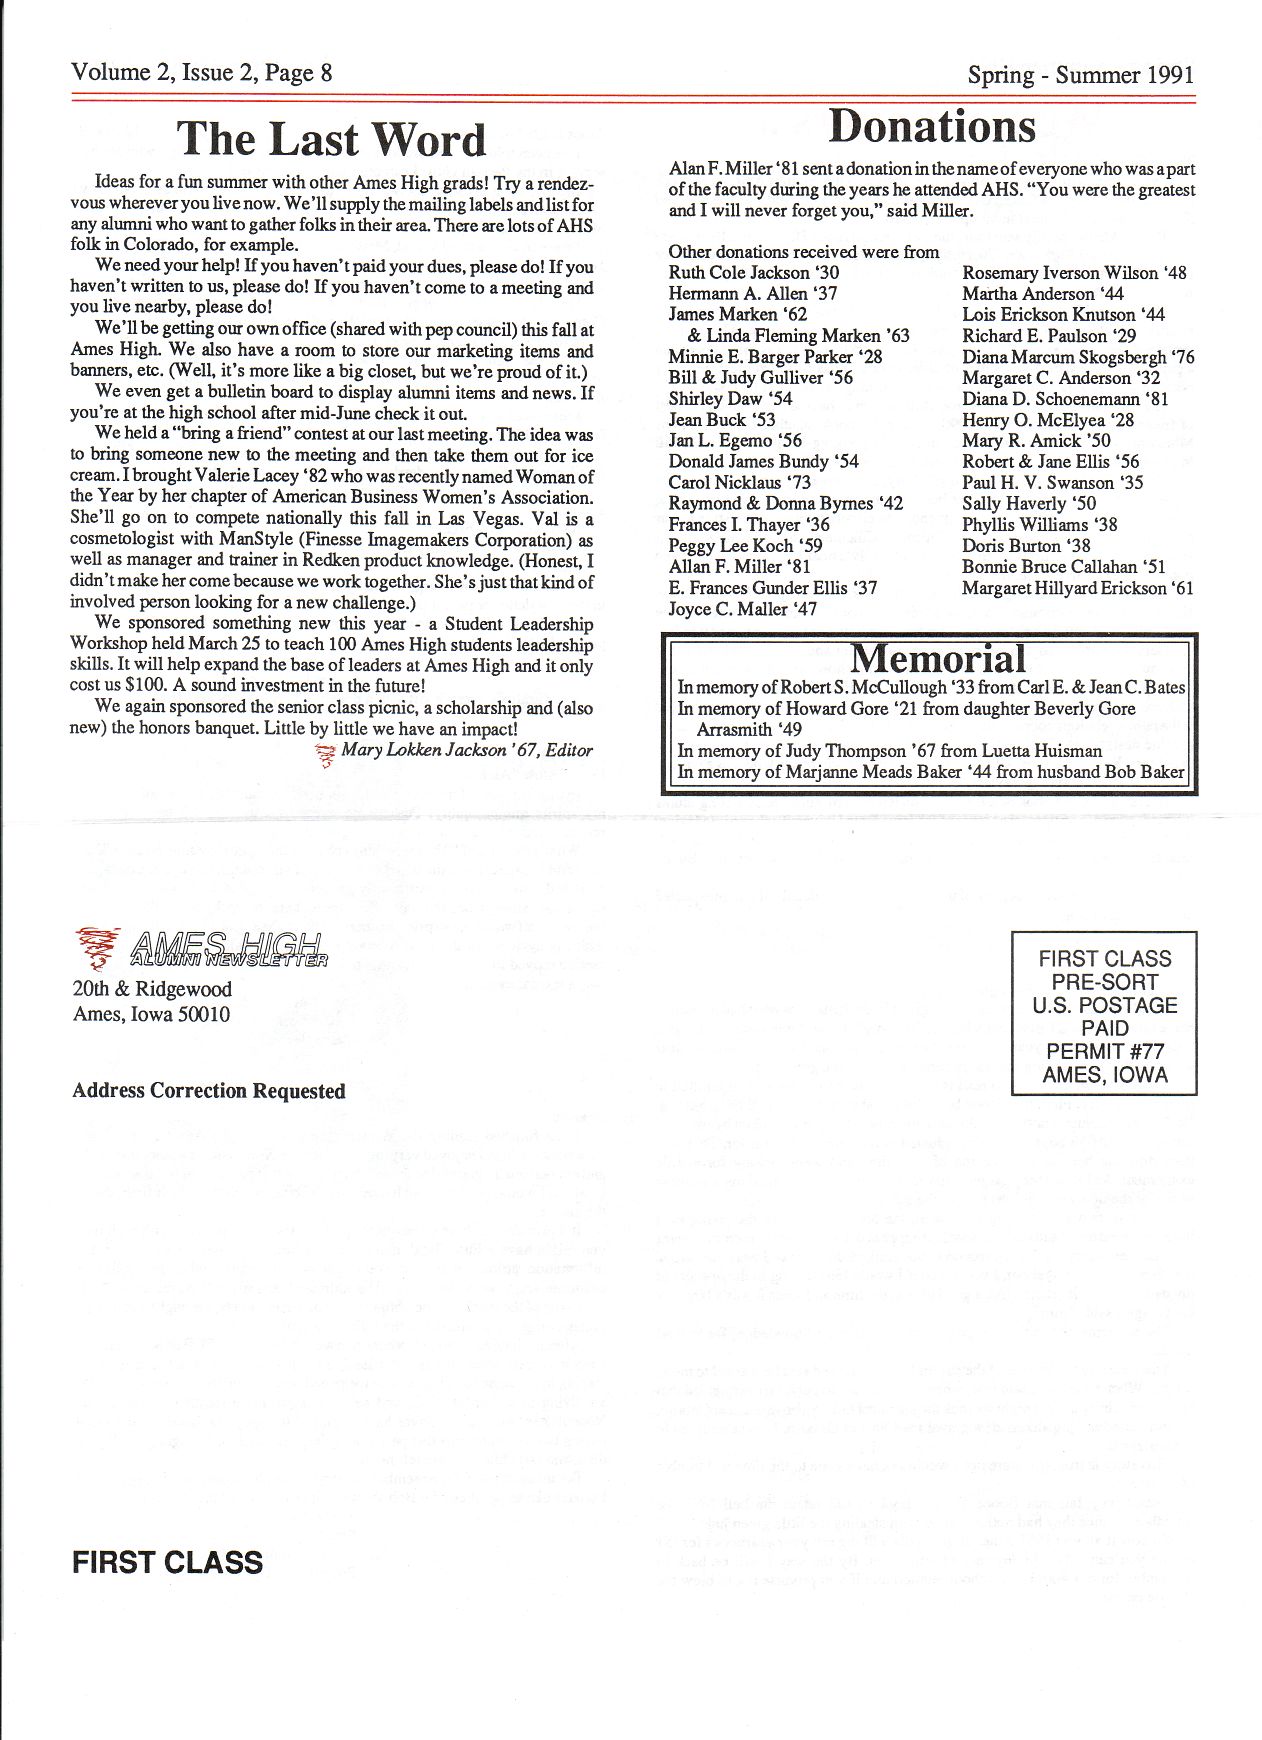 1991 page 8 Ames High School Alumni Assoc. spring-summer newsletter volume 2 issue 2